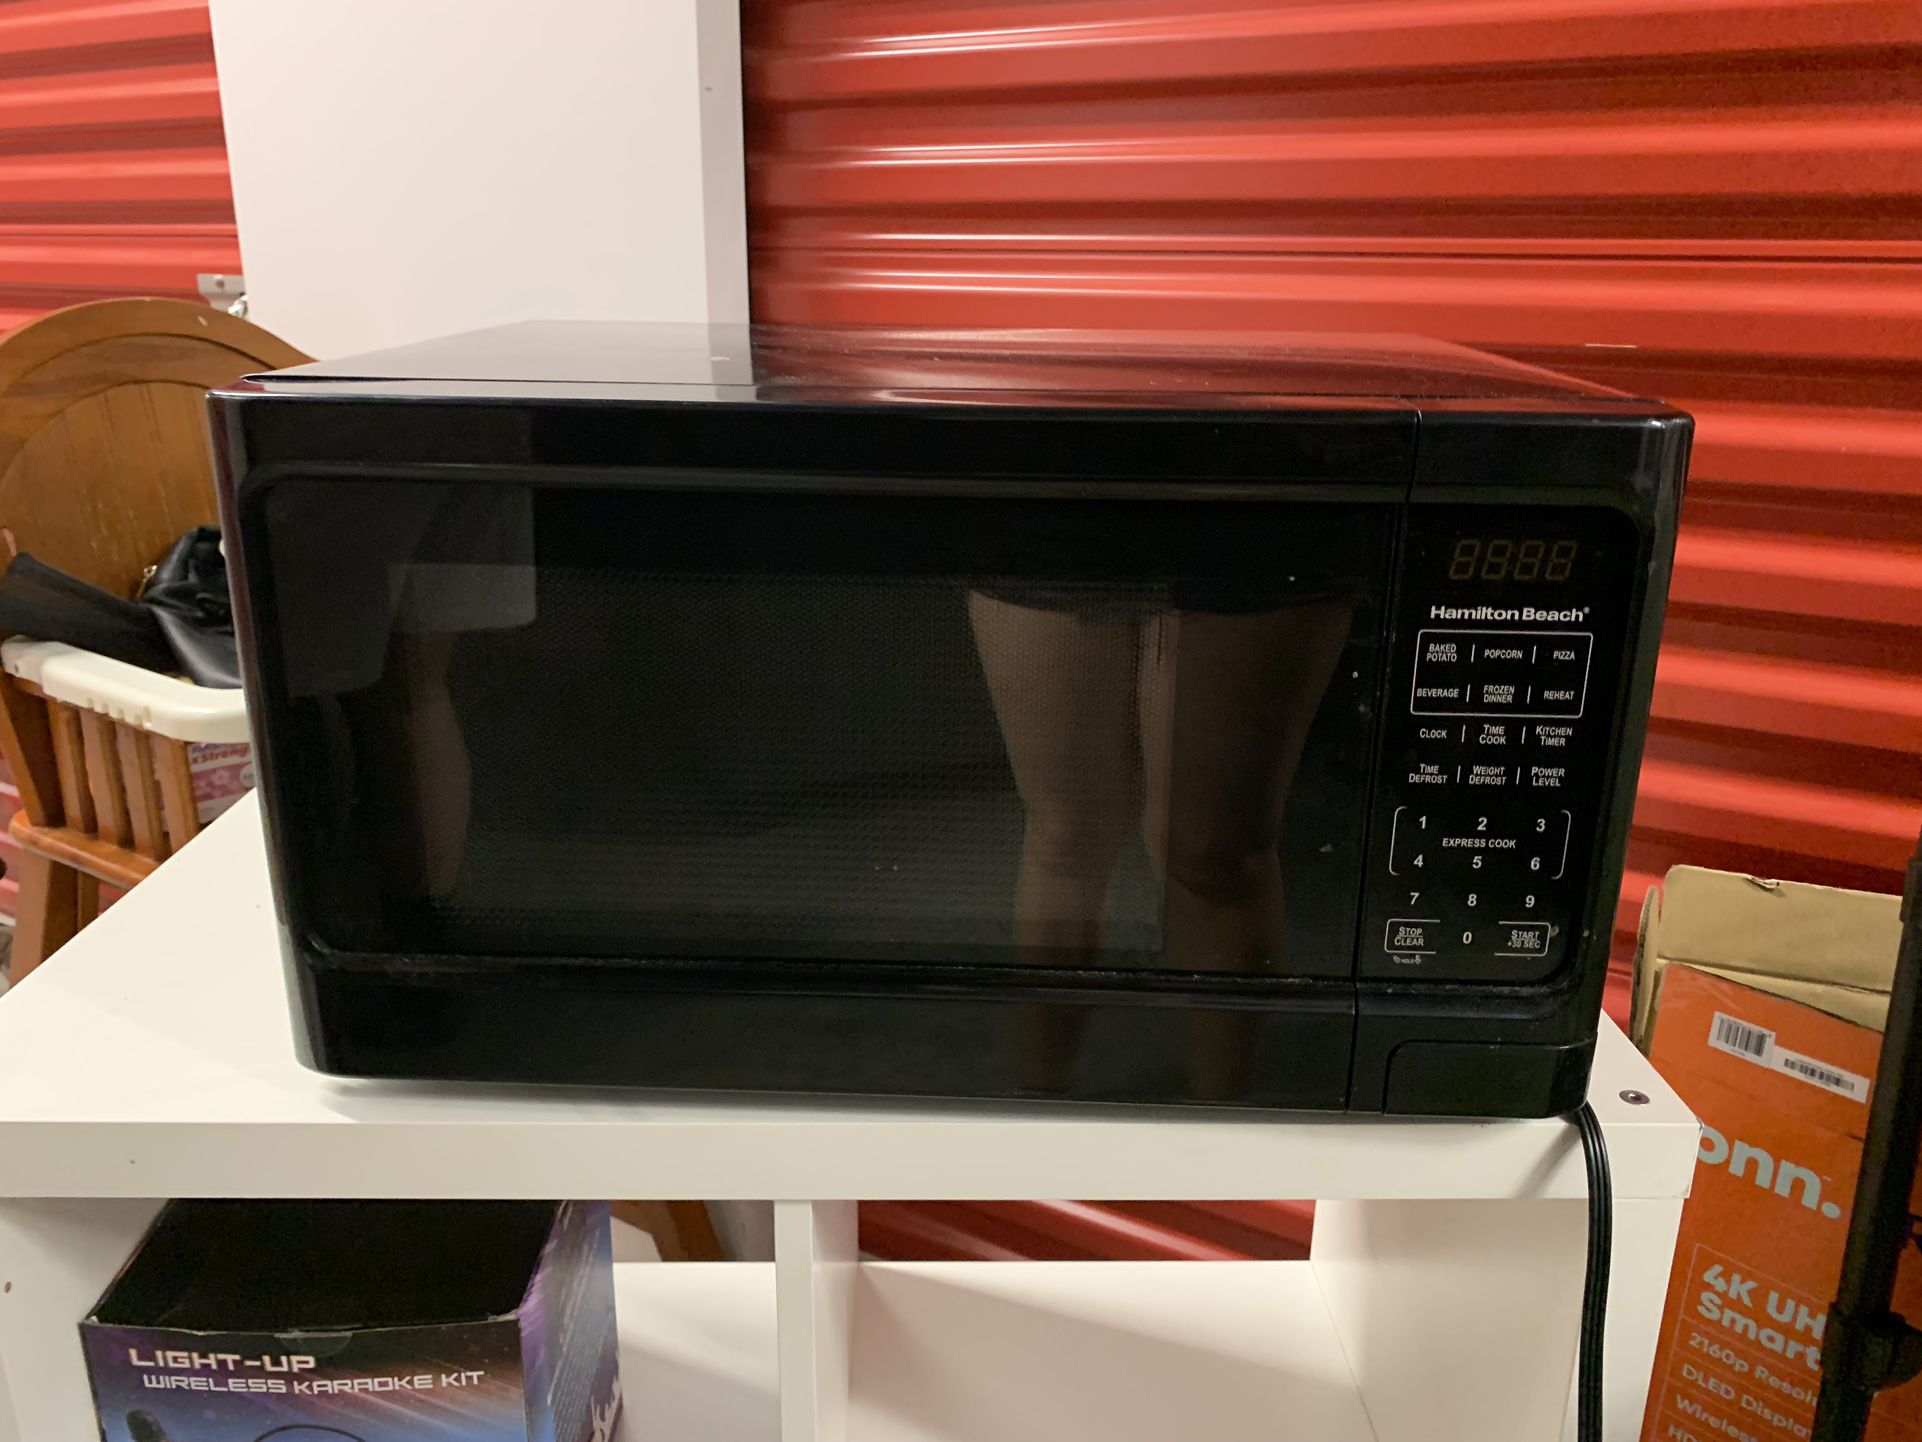 1500 Watt Microwave